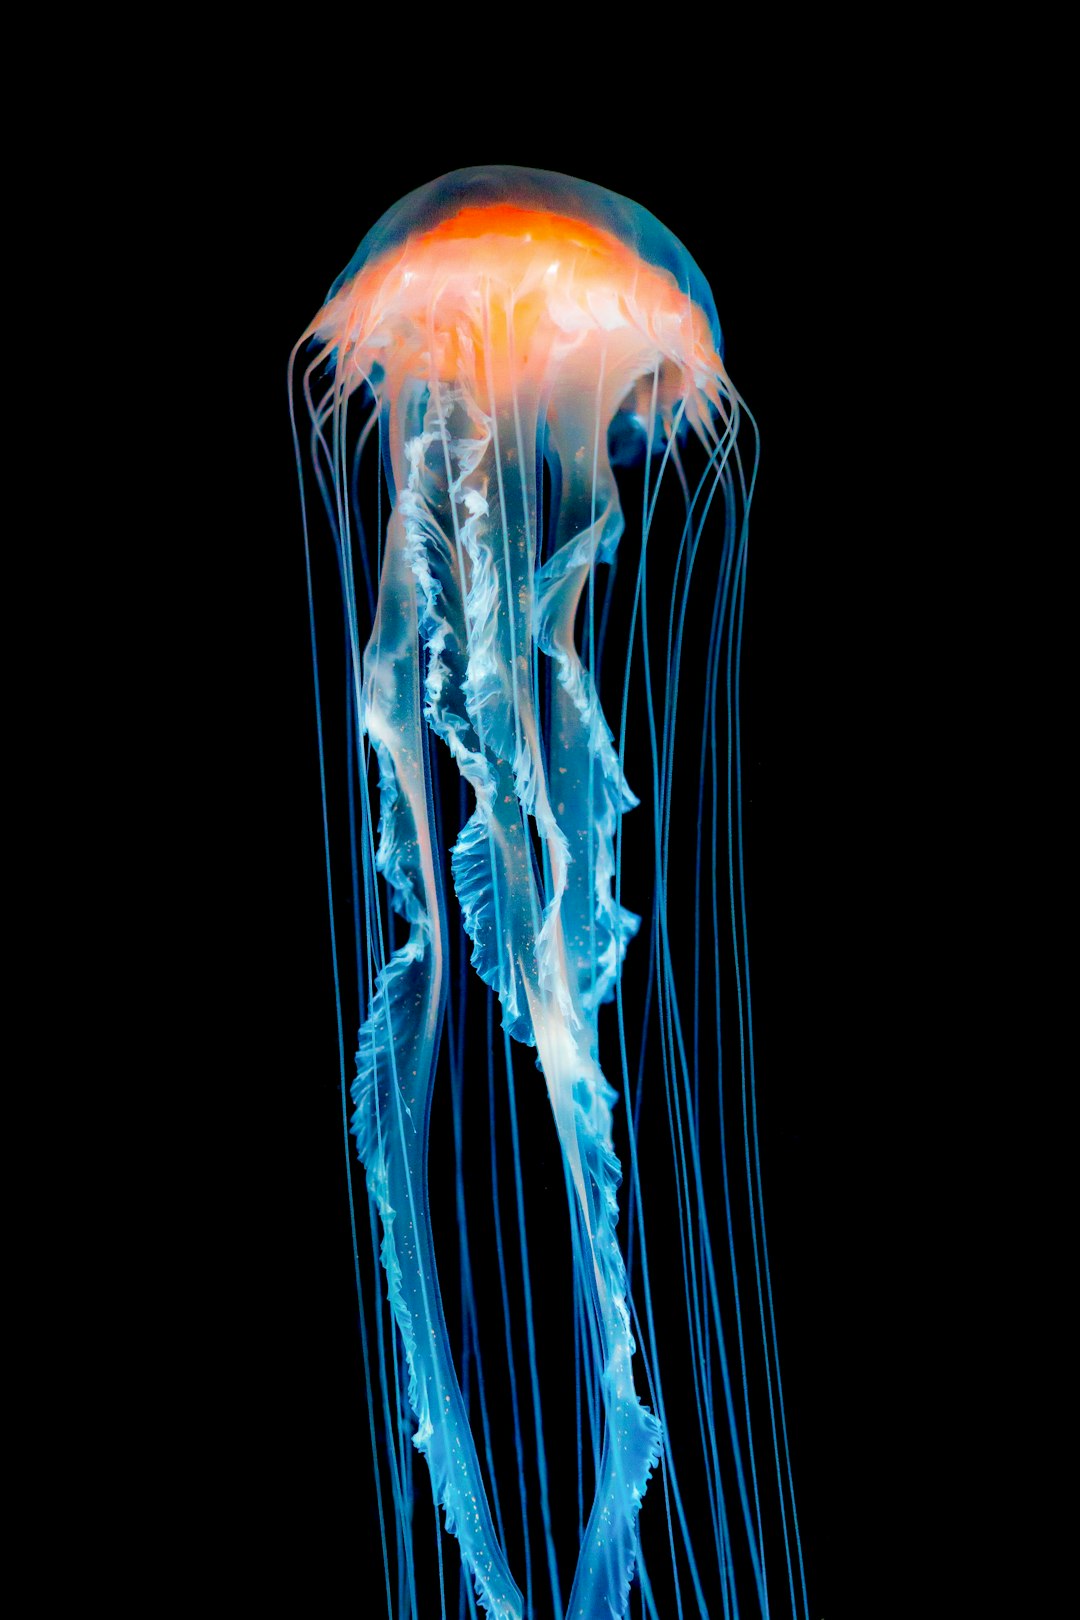  blue and white smoke illustration jellyfish